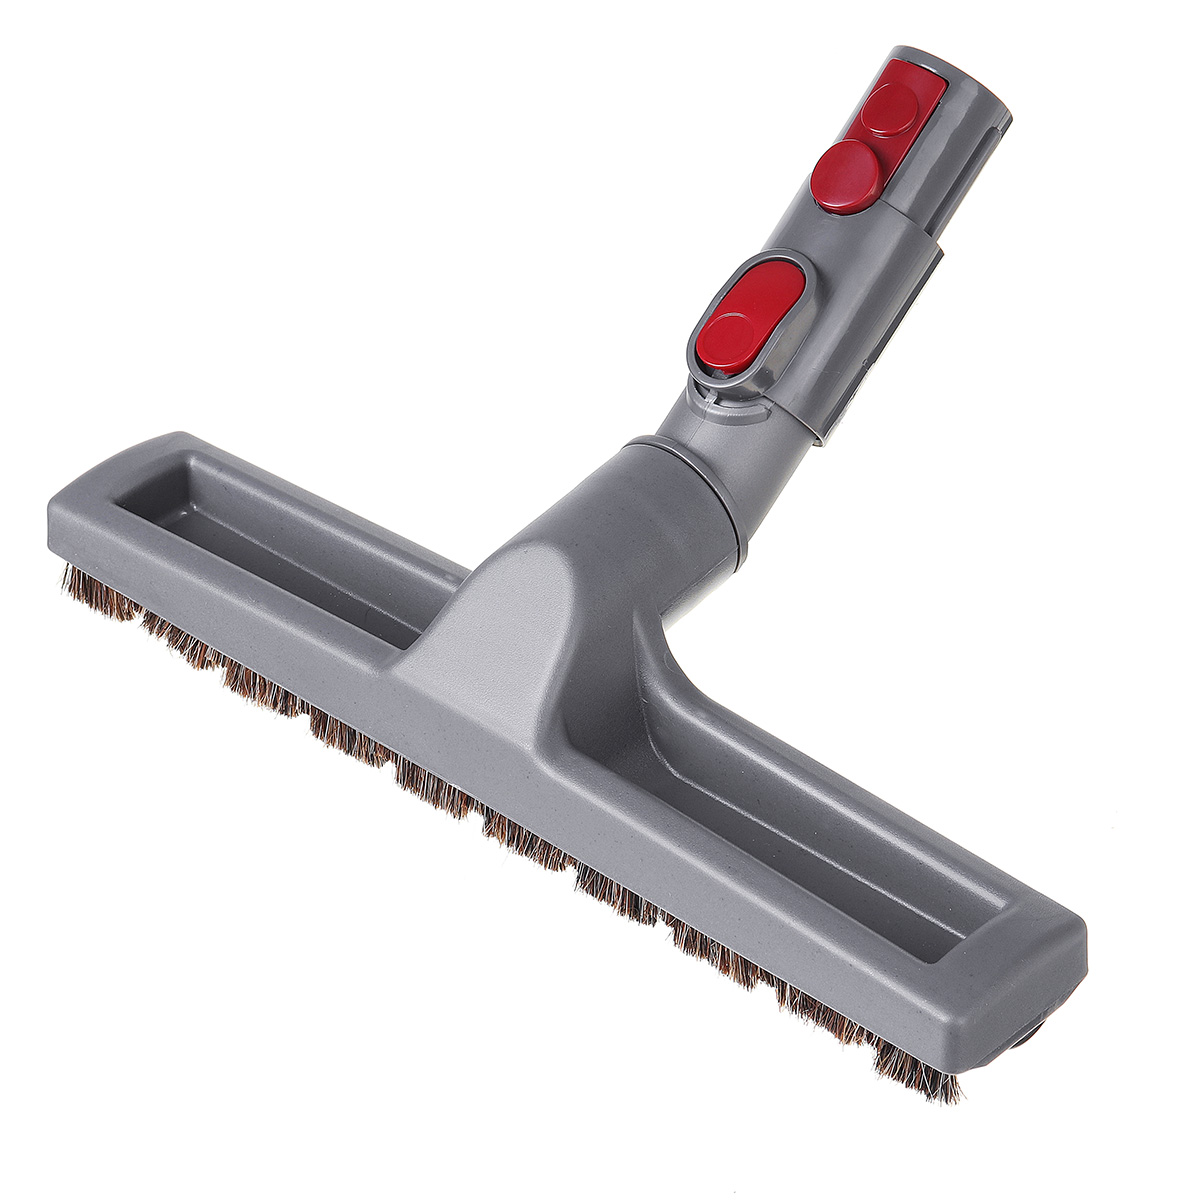 1pcs-Floor-Brush-Replacements-for-Dyson-V6-V7-V8-V10-V11-Vacuum-Cleaner-Parts-Accessories-1818338-6